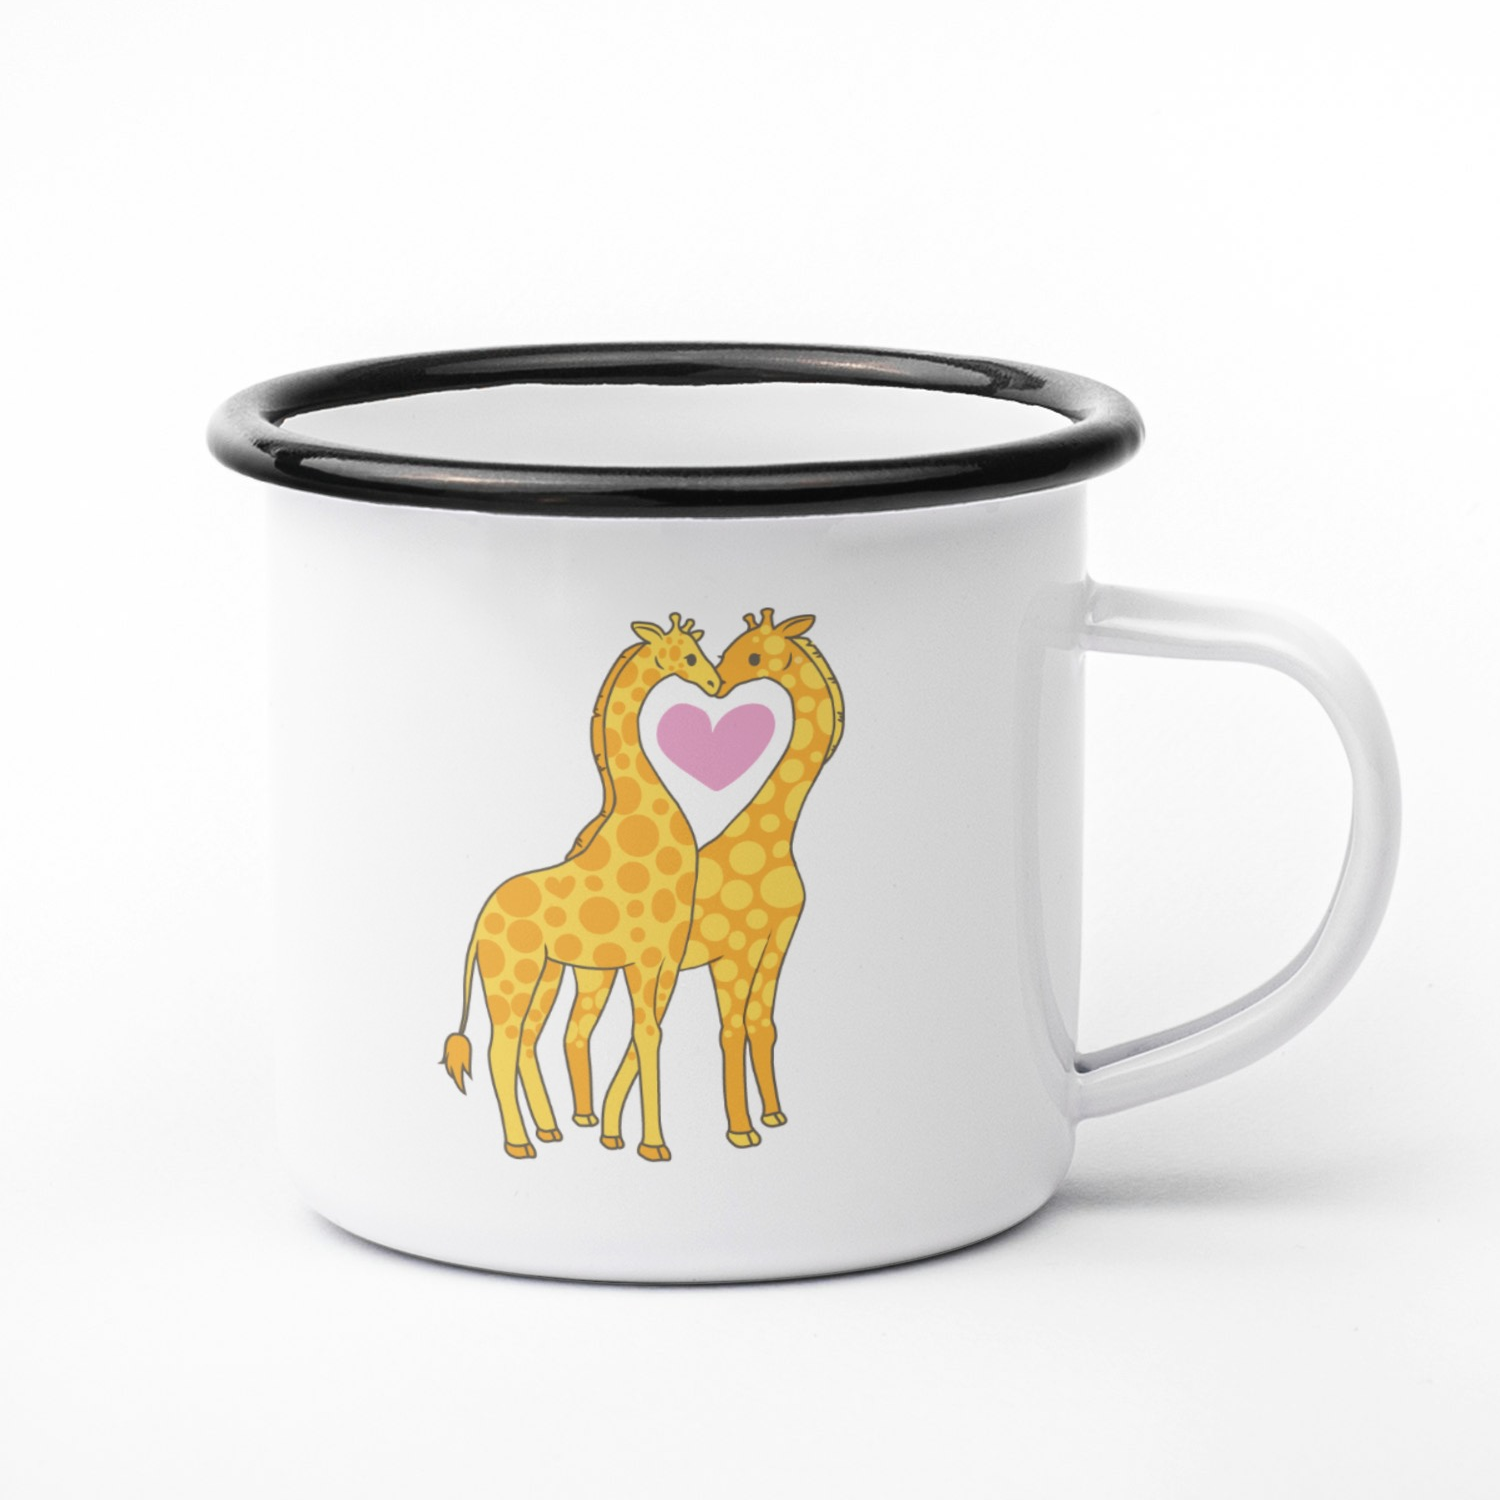 Designmugg - Giraff